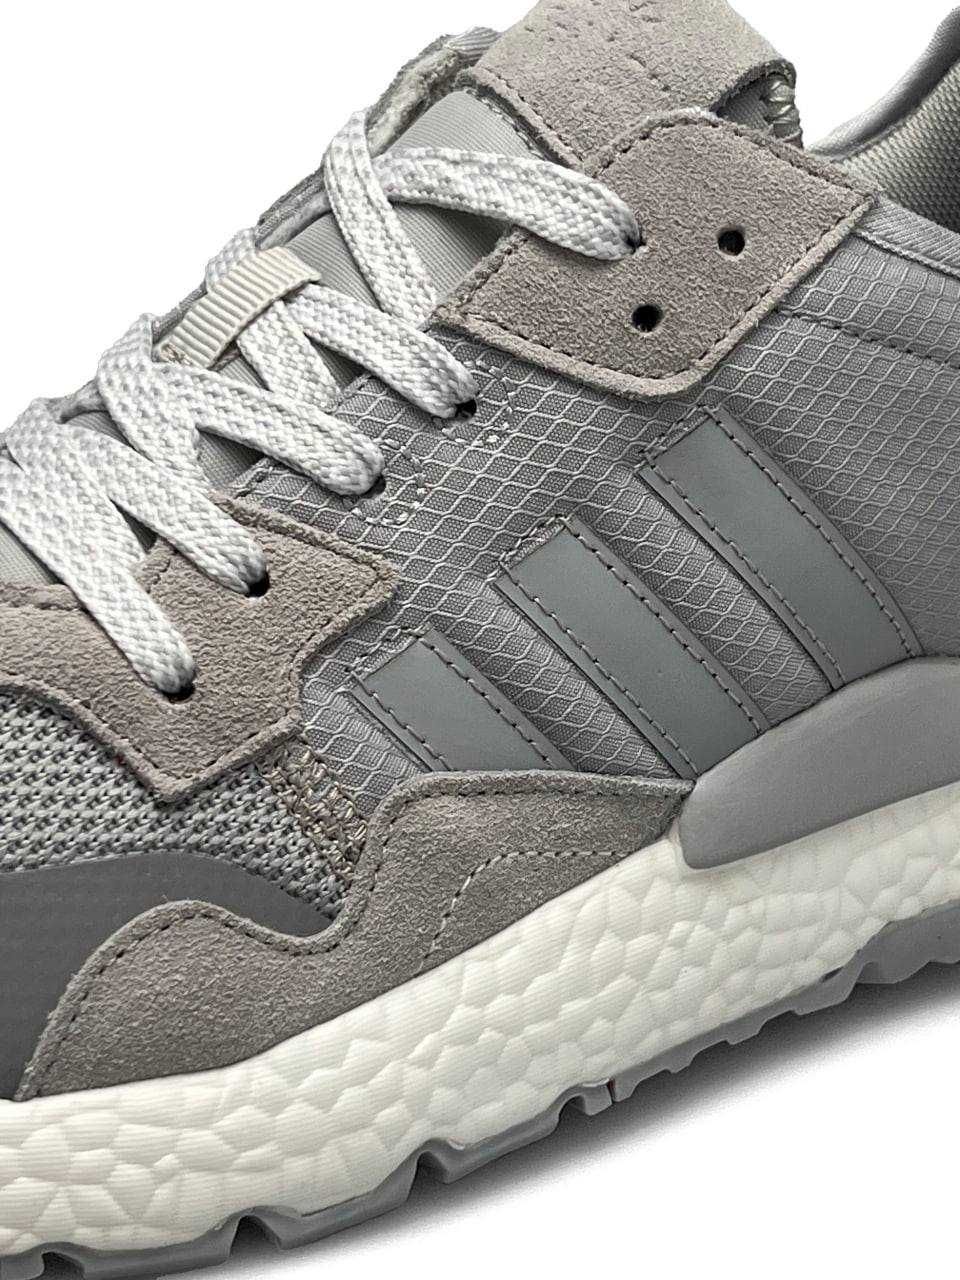 Adidas Nite Jogger Gray кроссовки мужские adidas gray (адидас)